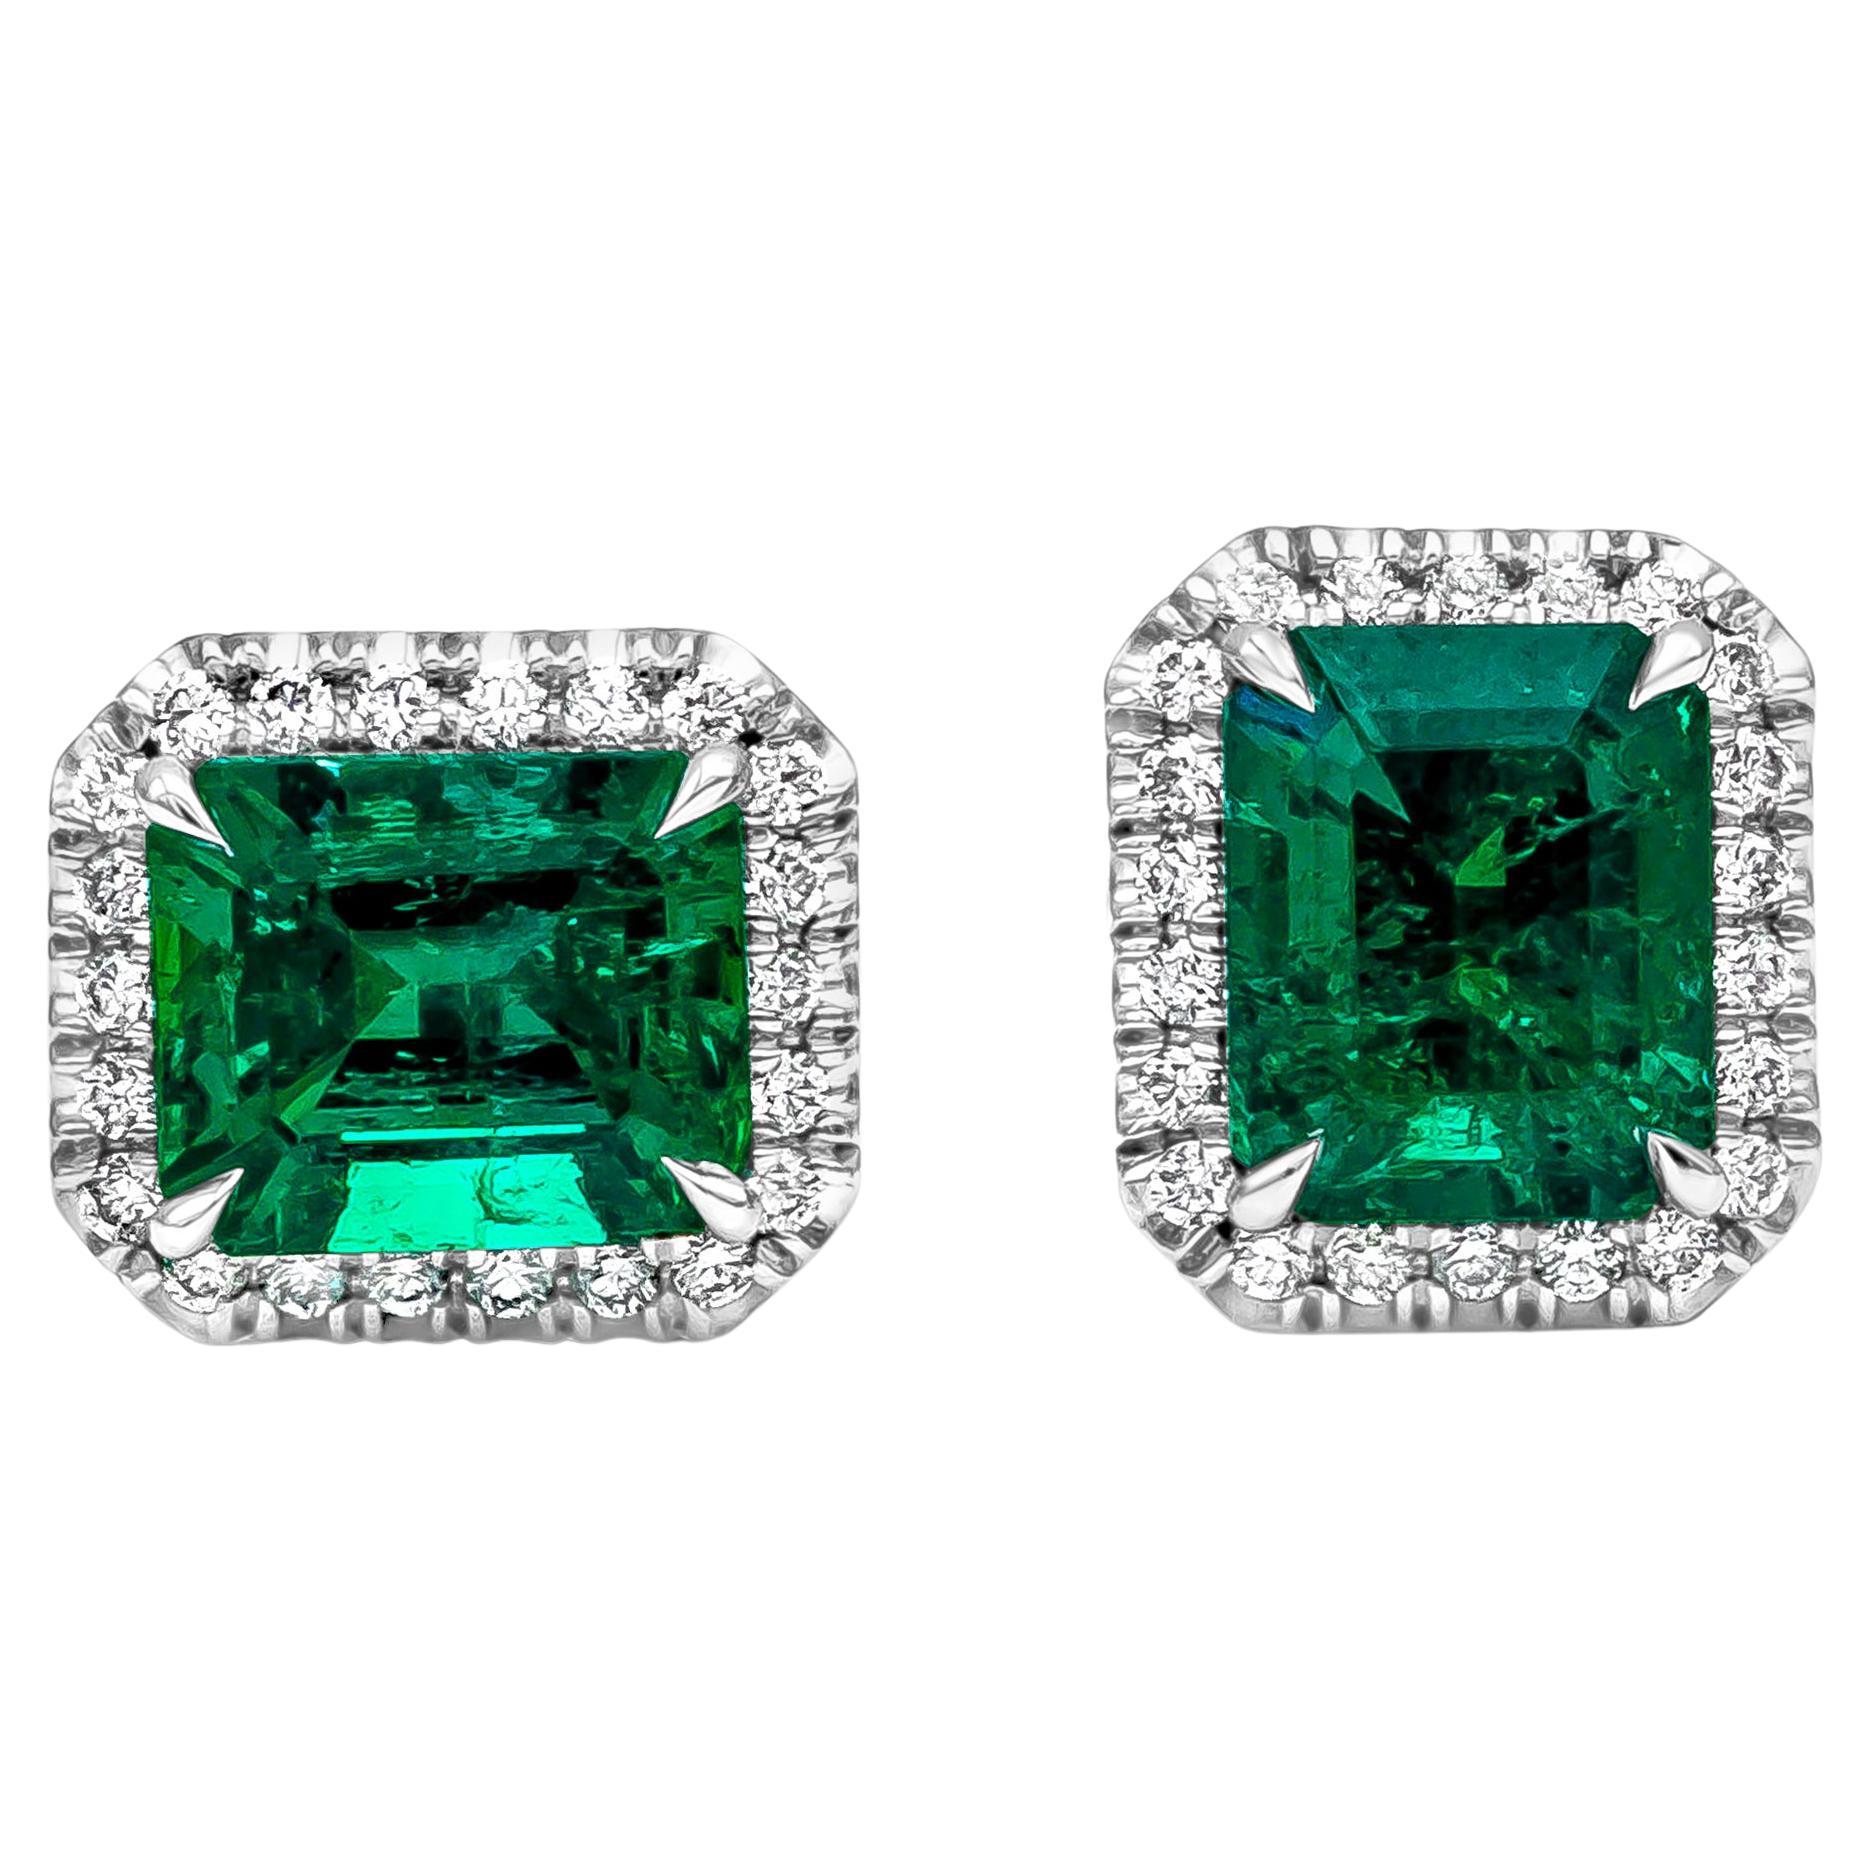 2.41 Carats Emerald Cut Colombian Muzo Emerald with Diamond Halo Stud Earrings For Sale